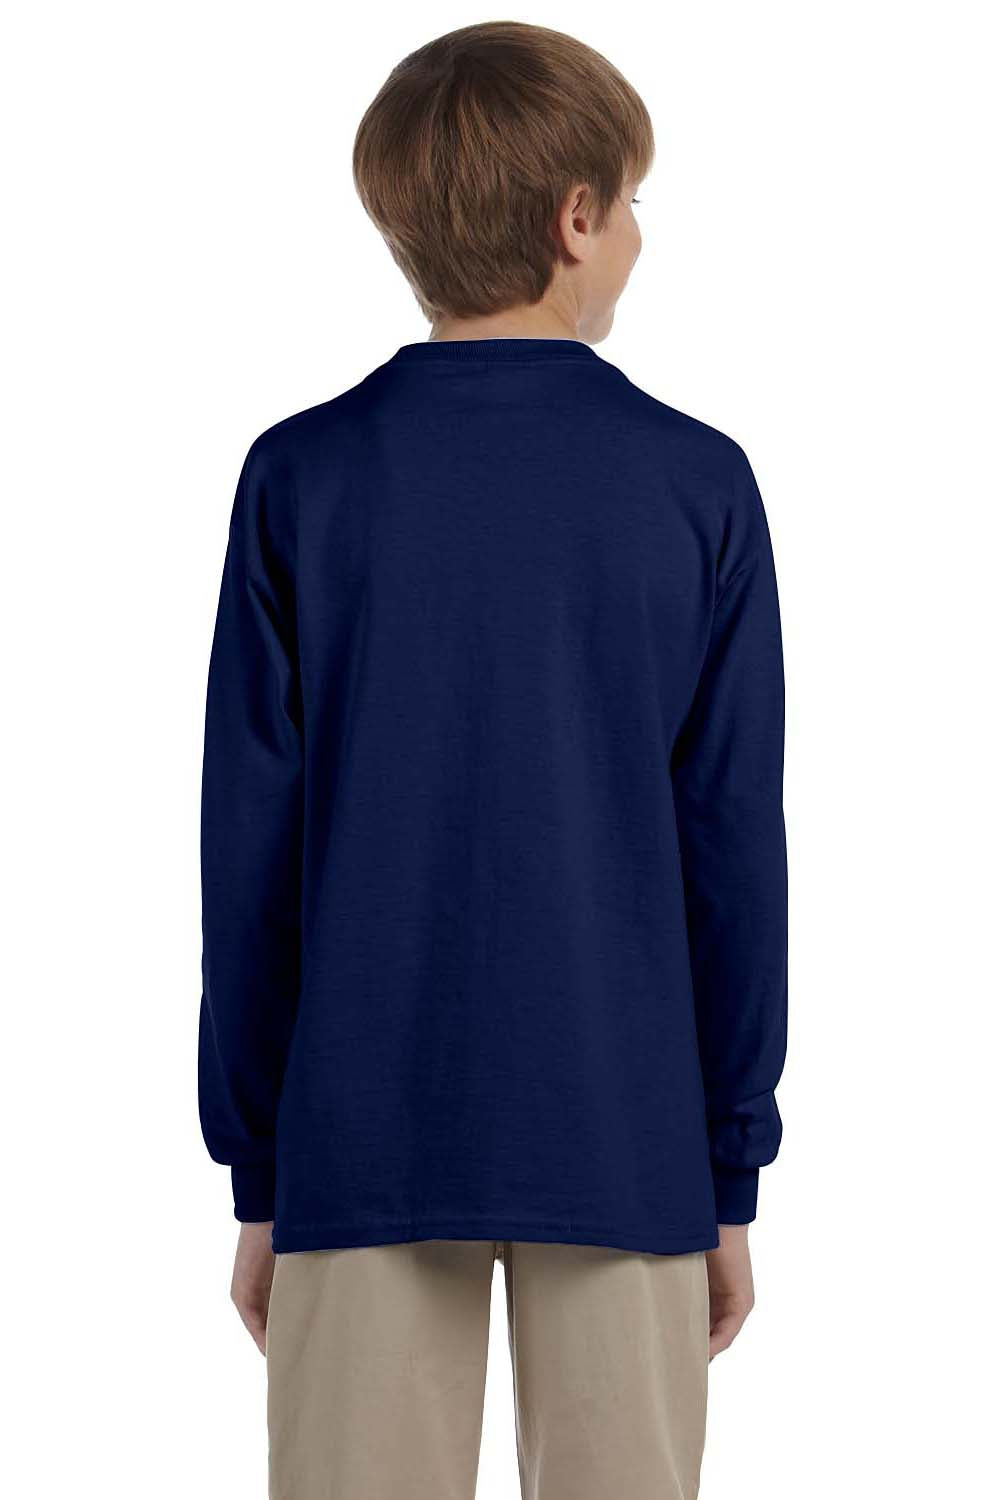 Gildan G240B Youth Ultra Long Sleeve Crewneck T-Shirt Navy Blue Back